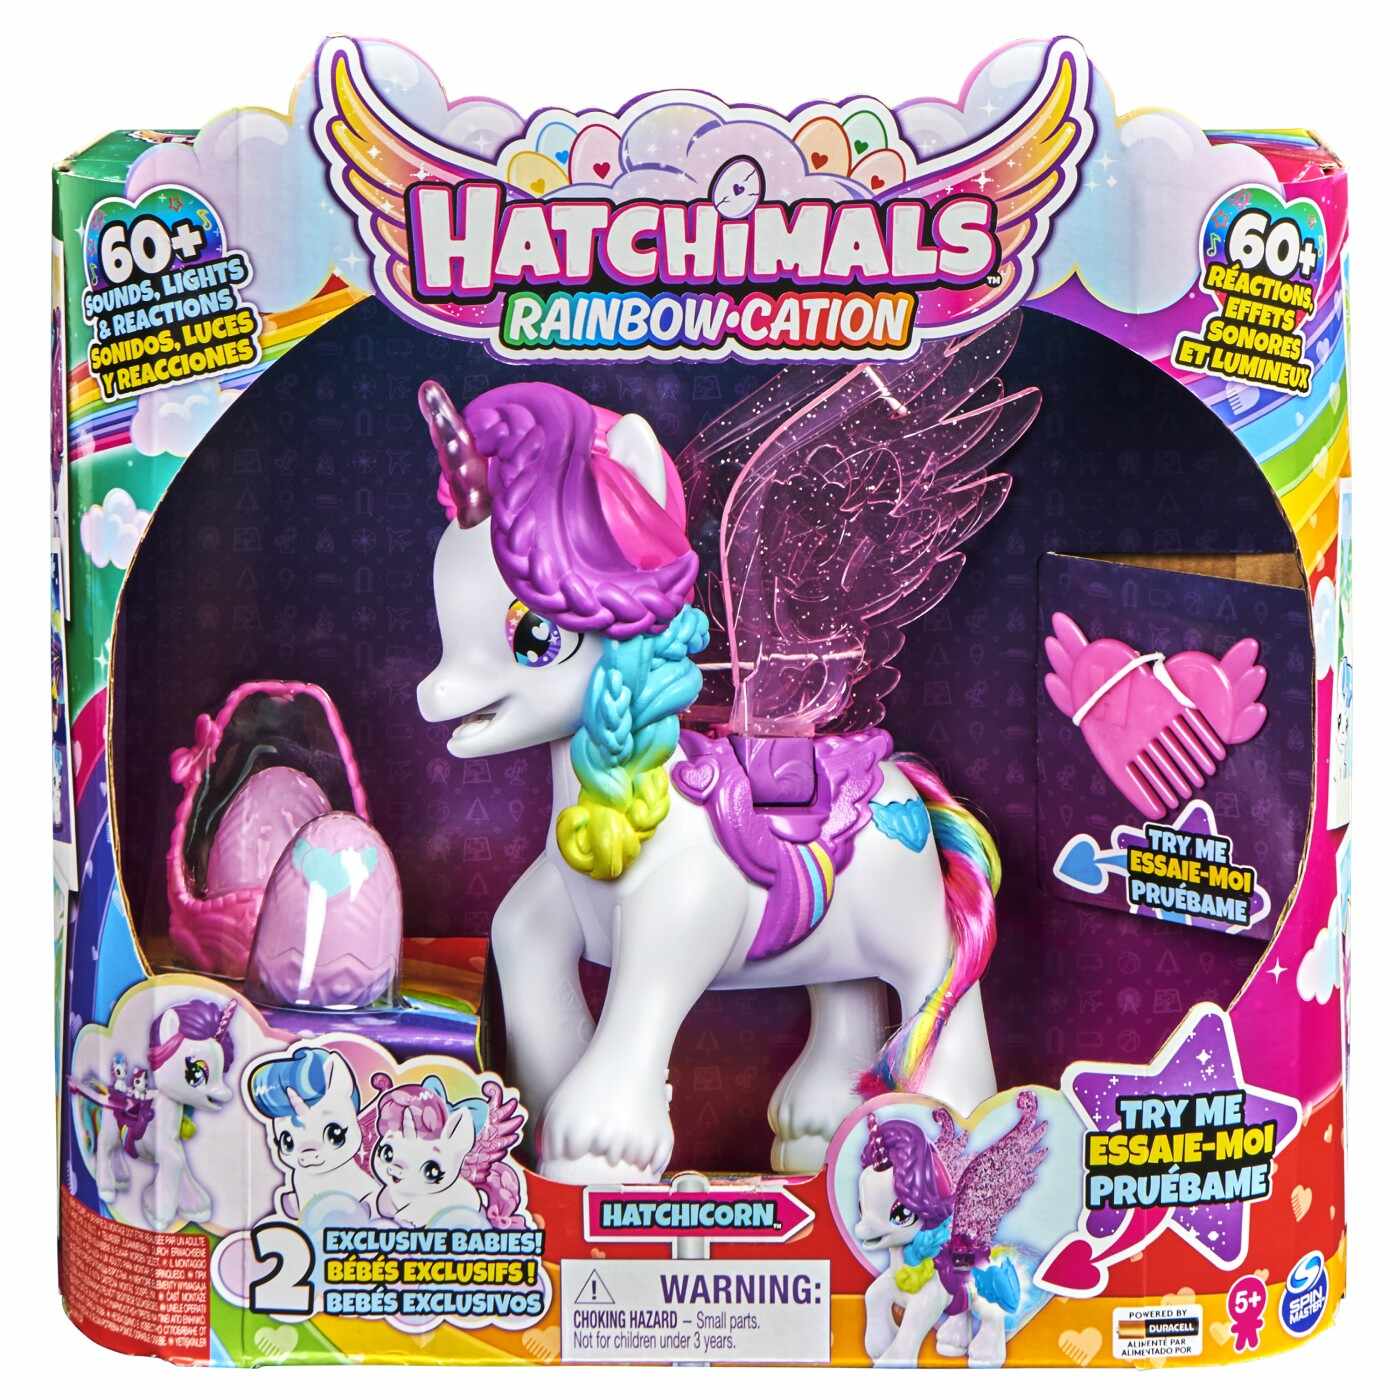 Figurina - Hatchimals Rainbow-Cation - Hatchicorn | Spin Master